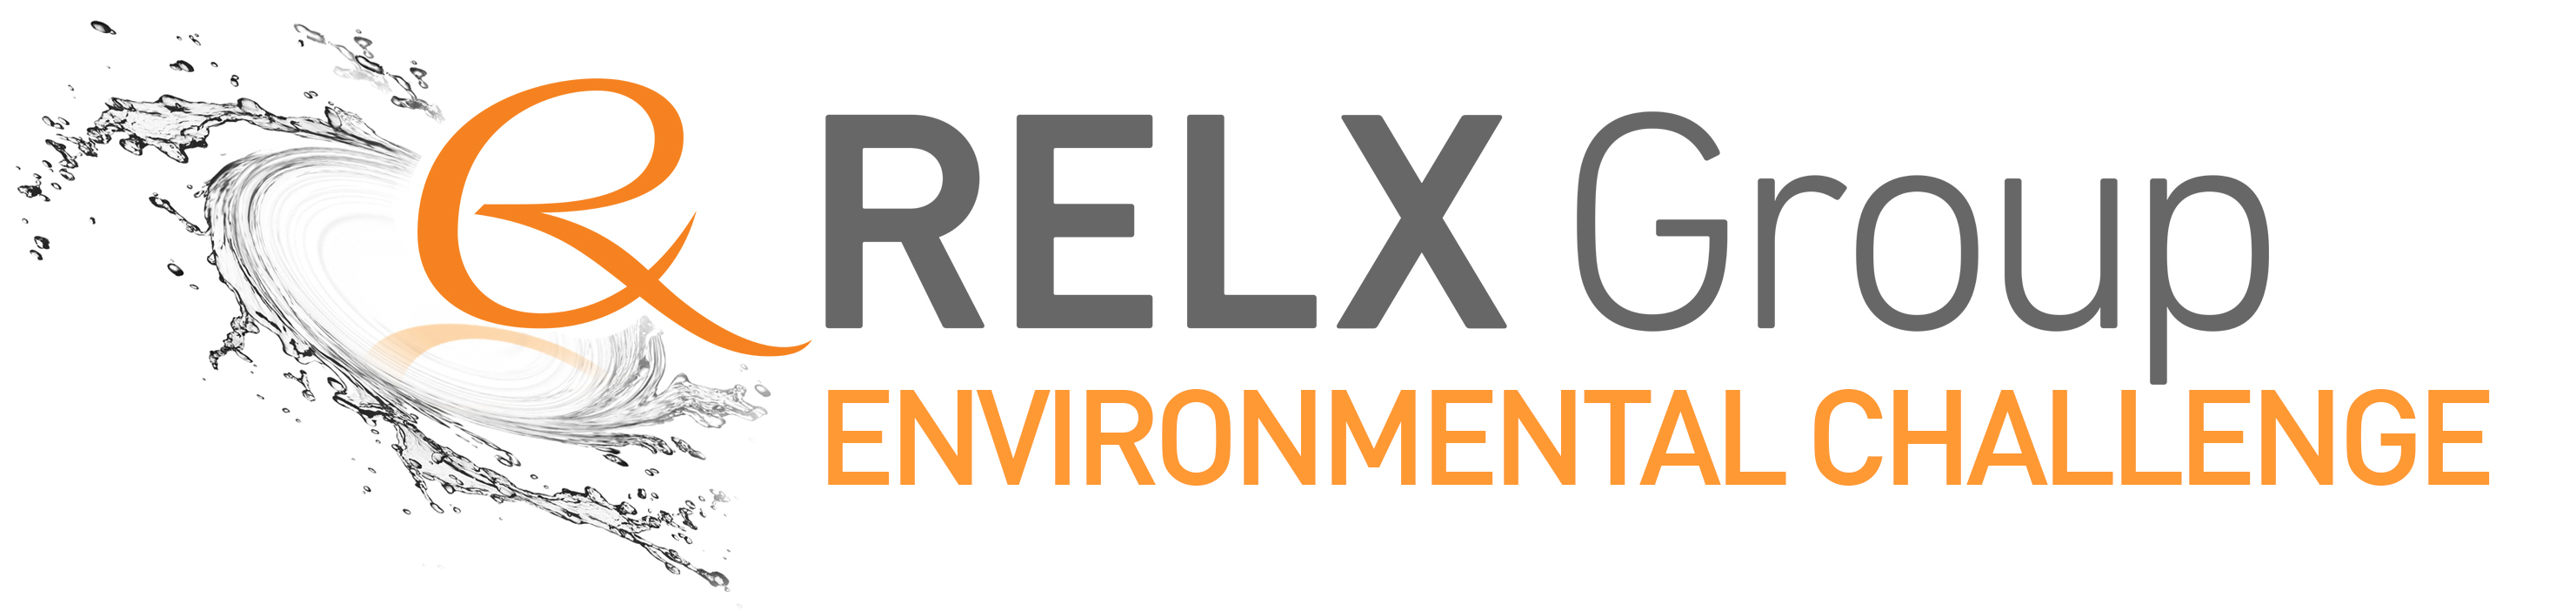 Relx Group Environmental Challenge logo